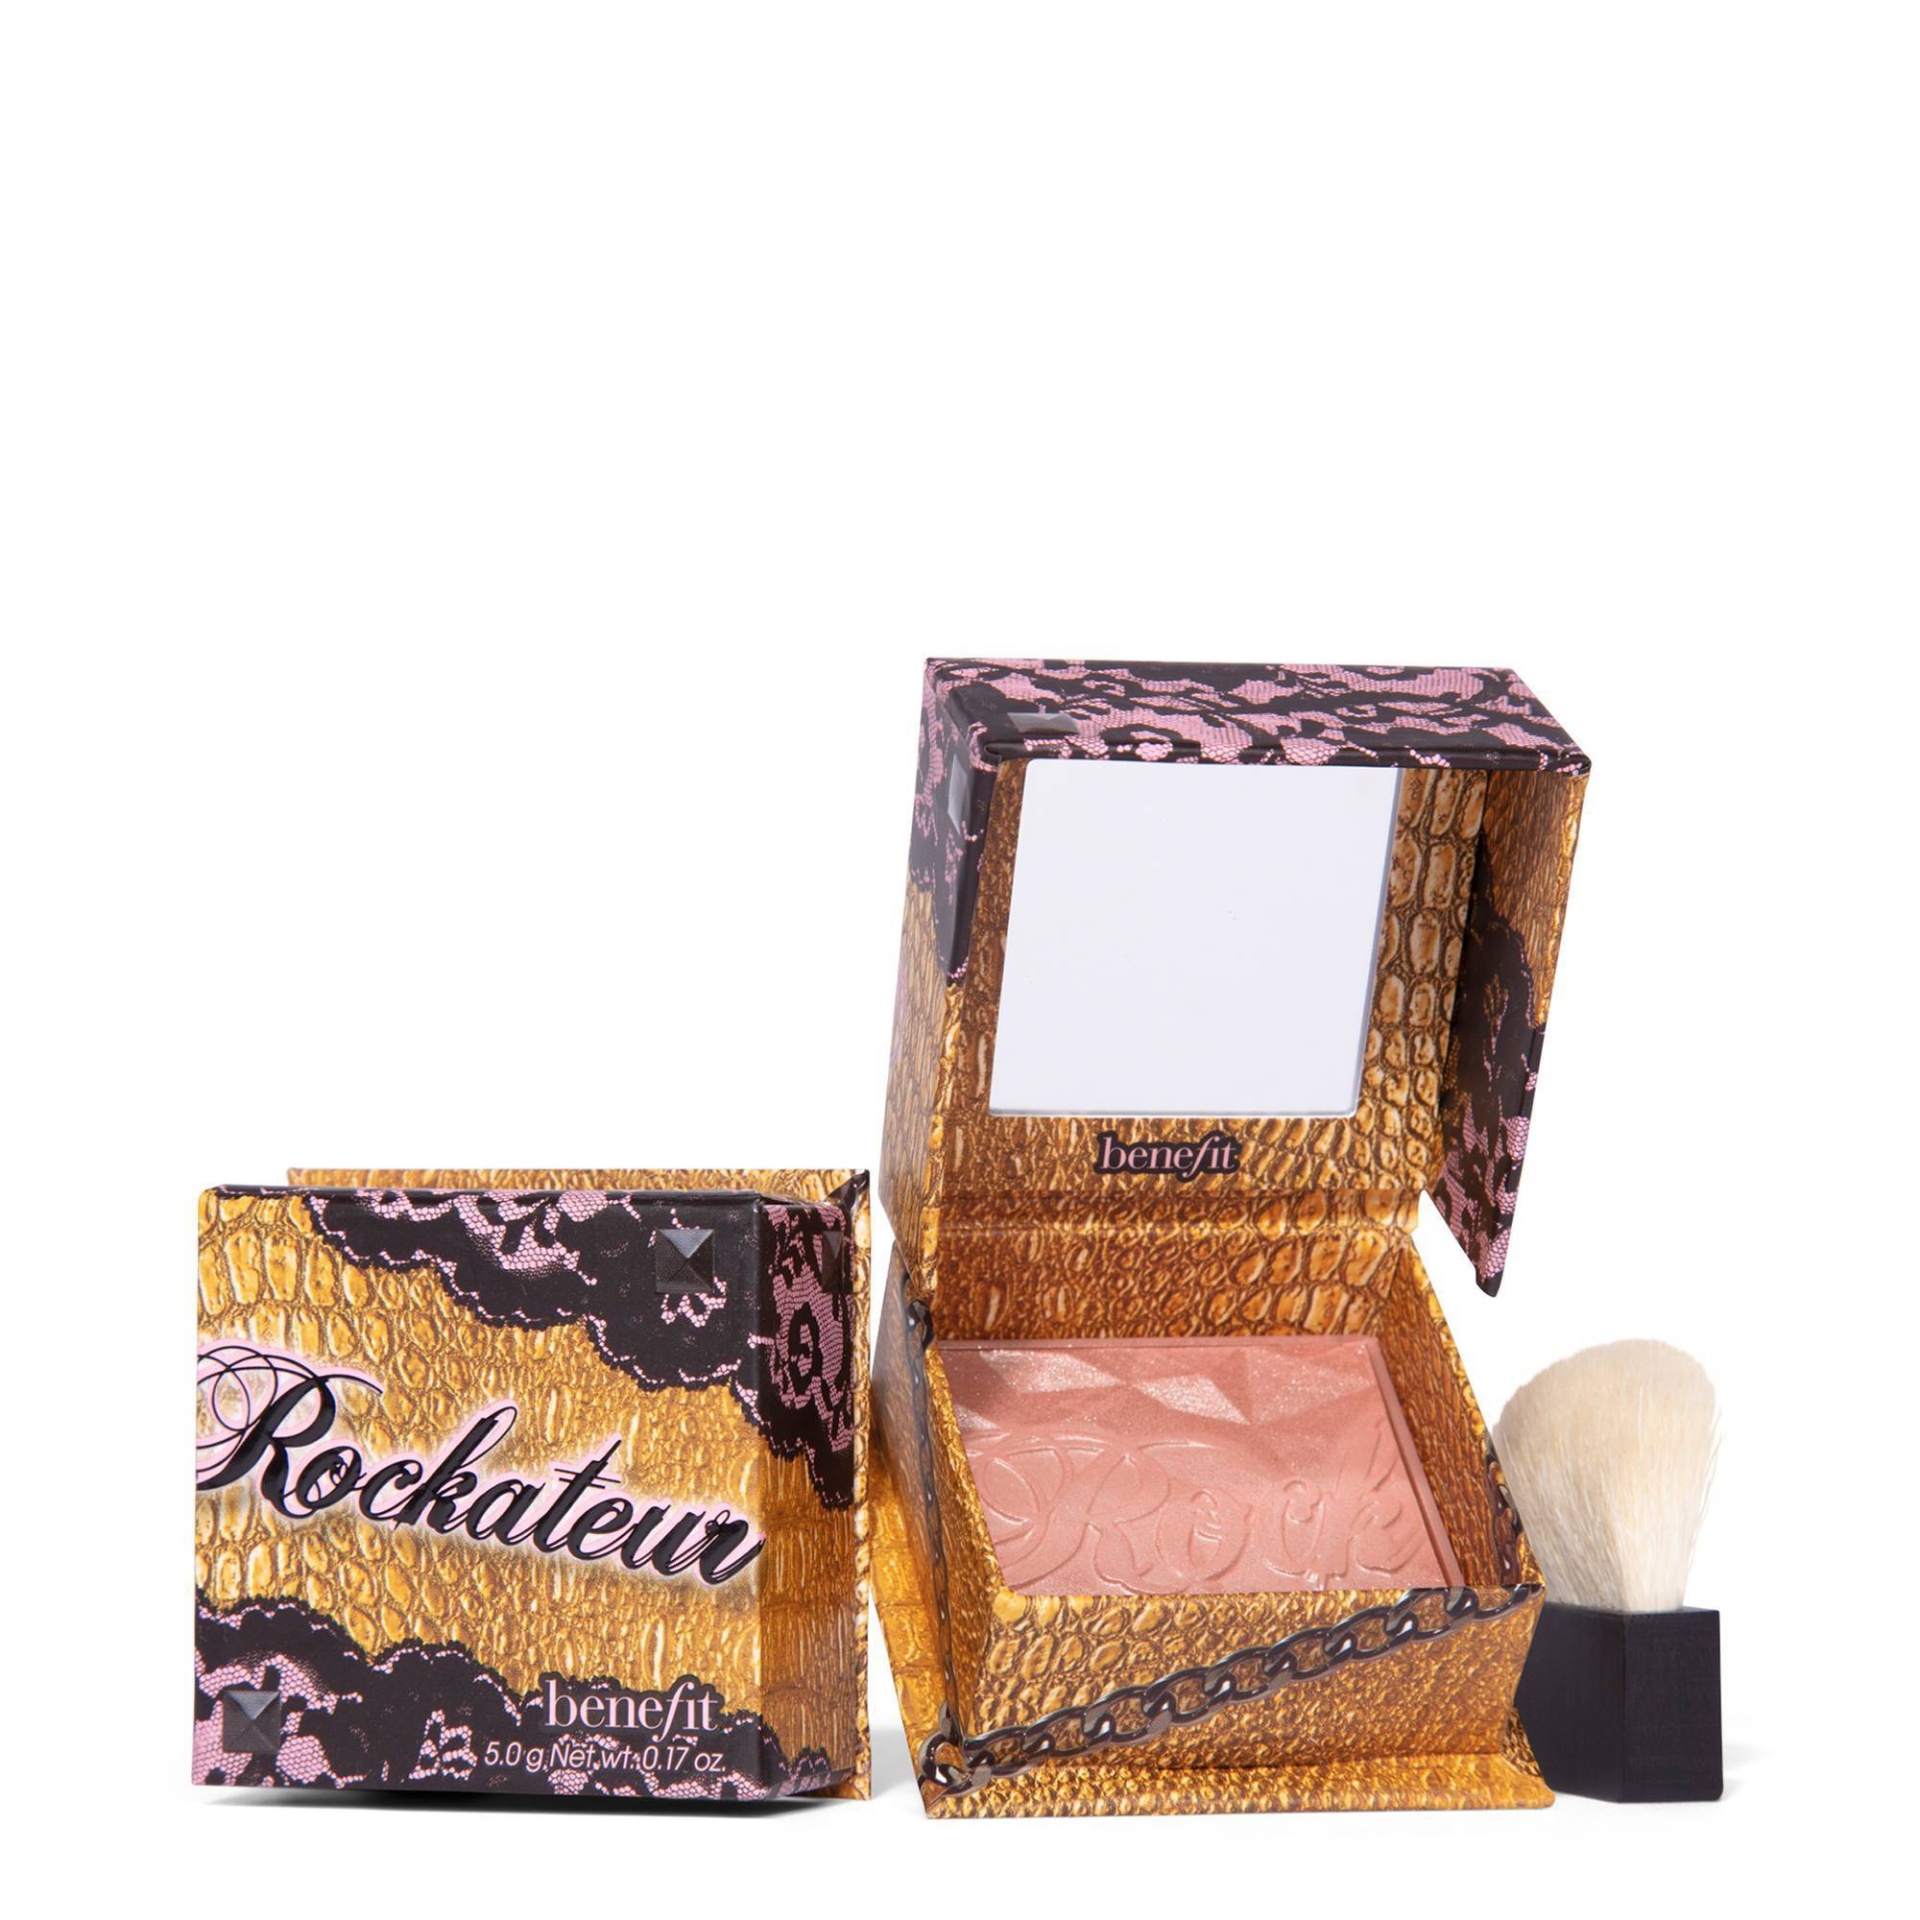 Benefit Cosmetics Rockateur Rose Gold Cheek Powder, 0.17 oz